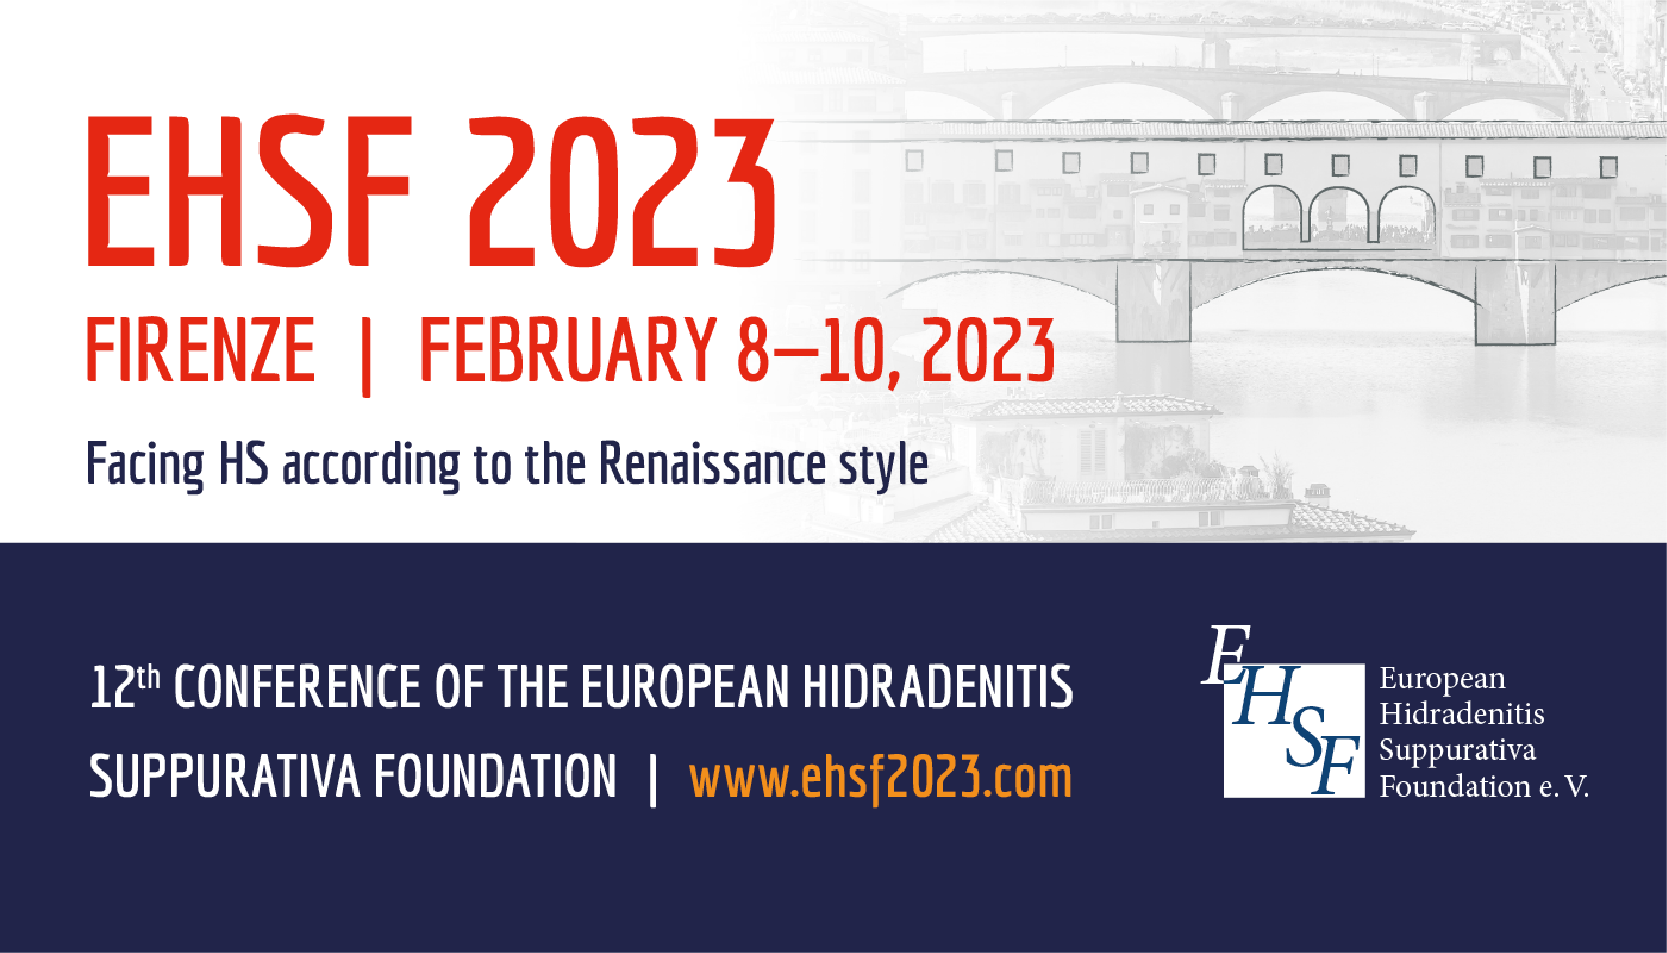 12th Conference of the European Hidradenitis Suppurativa Foundation e.V. - EHSF 2023